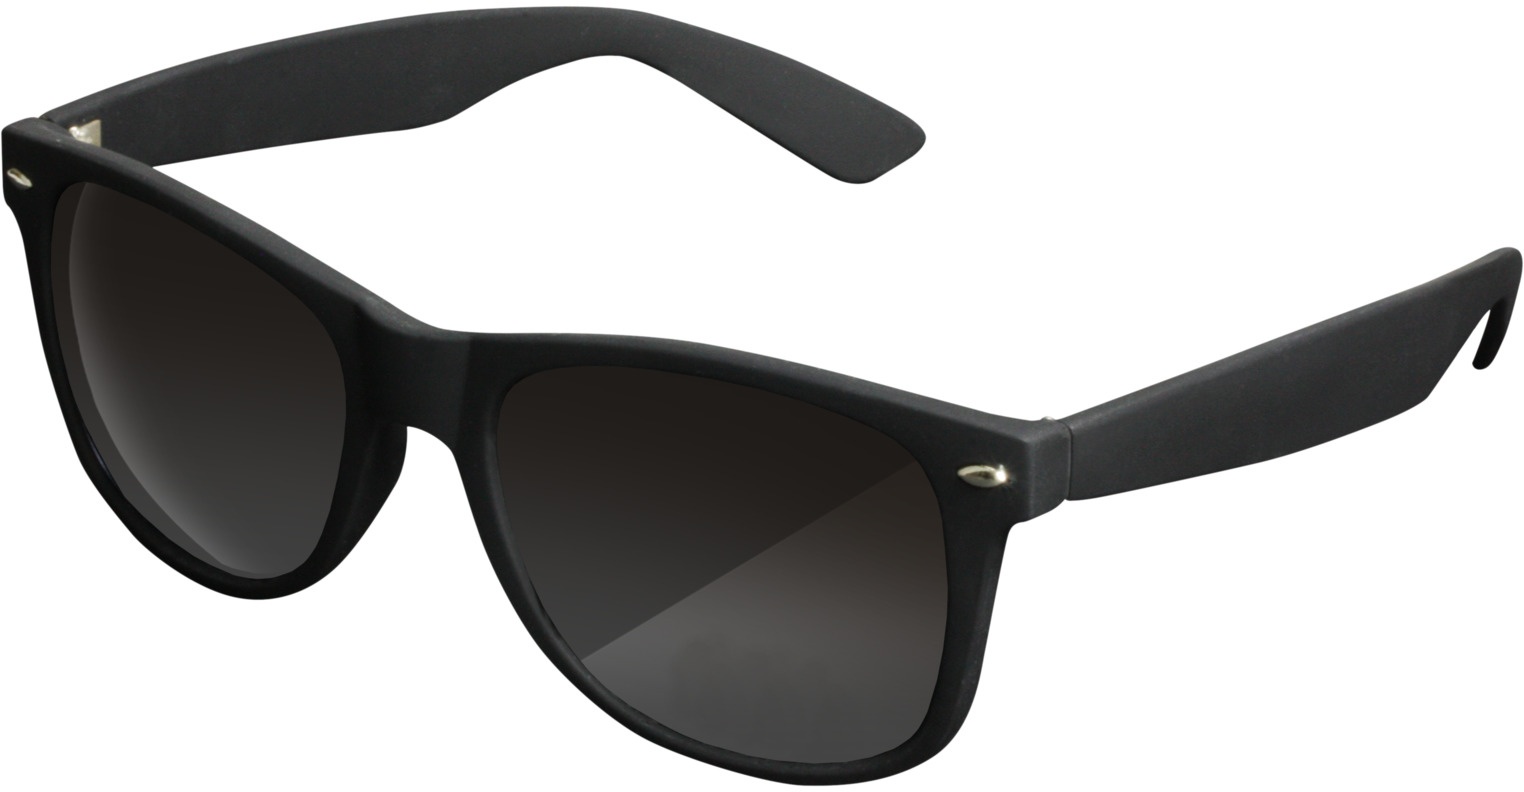 Sunglasses Men Black | Likoma Sunglasses Lifestyle | MSTRDS | Glasses Sun